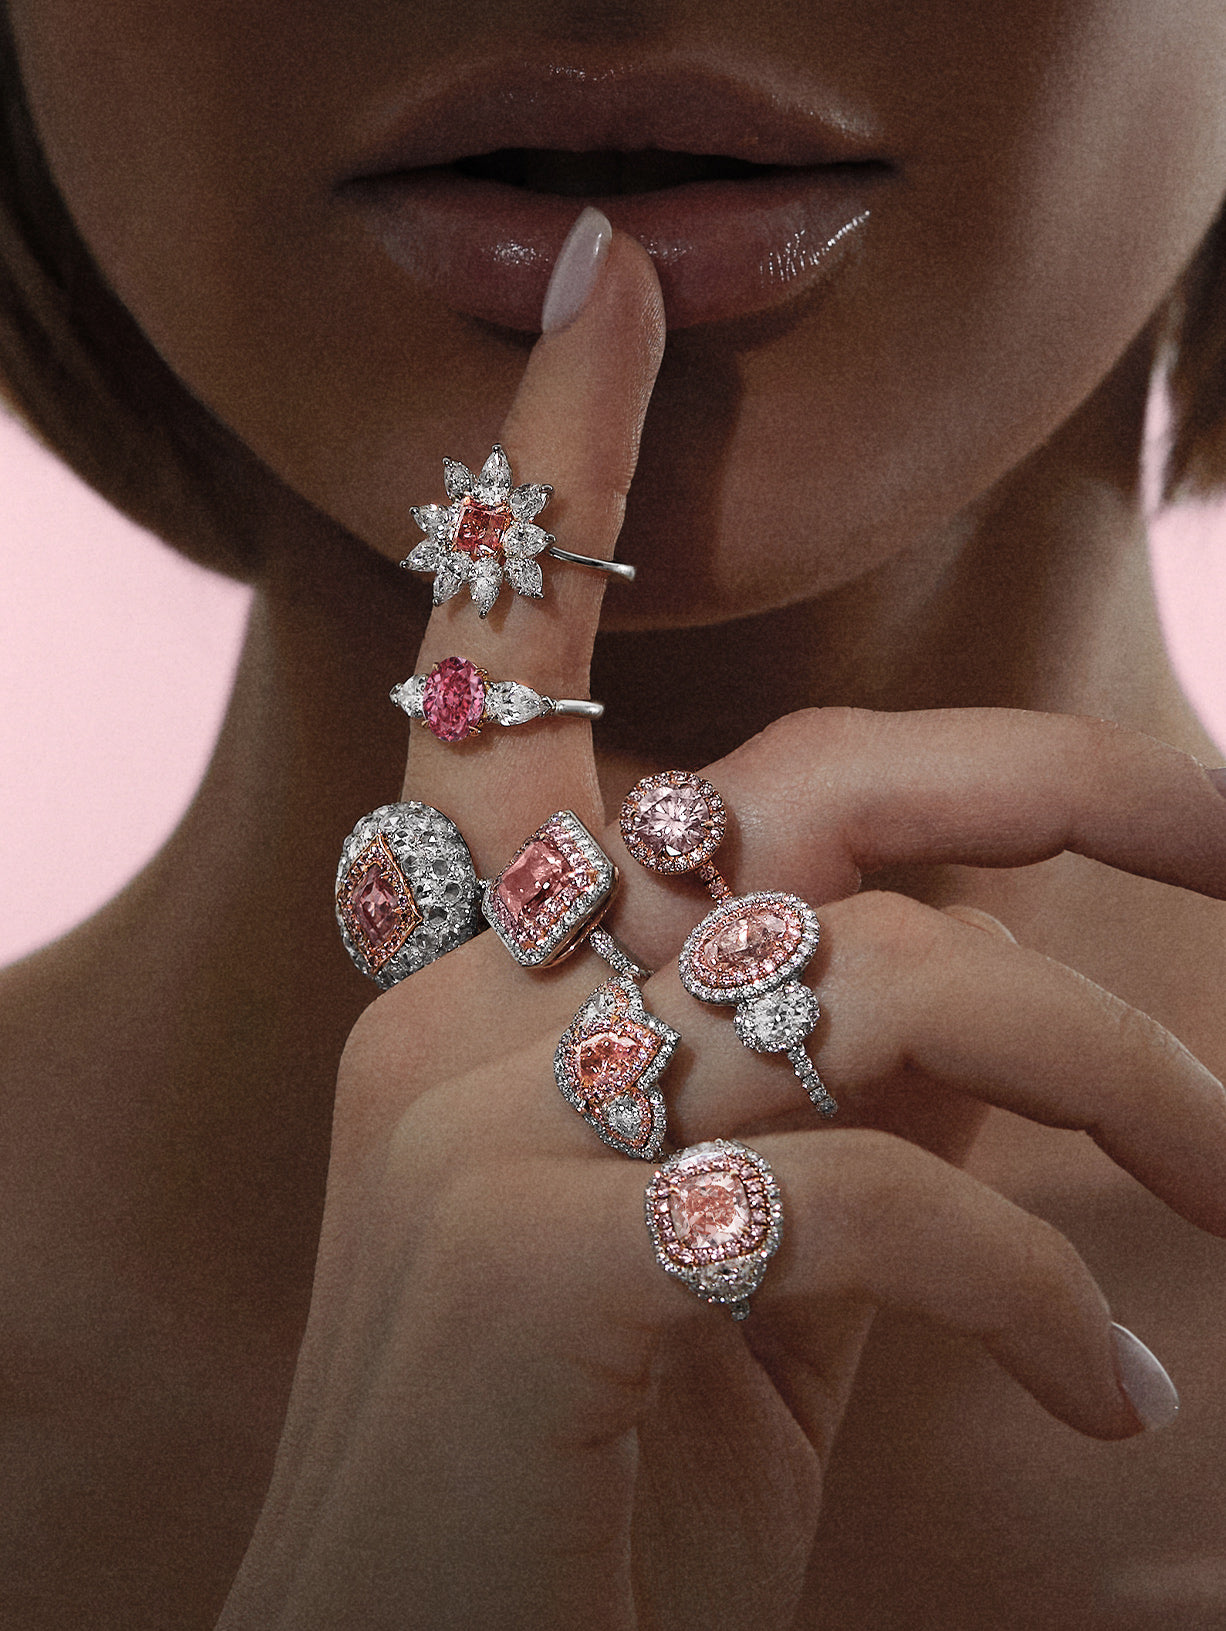 Intense Pink Radiant Diamond Ring - Pink Diamonds, J FINE - J Fine, Rings - Pink Diamond Jewelry, intense-pink-radiant-diamond-ring-by-j-fine - Argyle Pink Diamonds